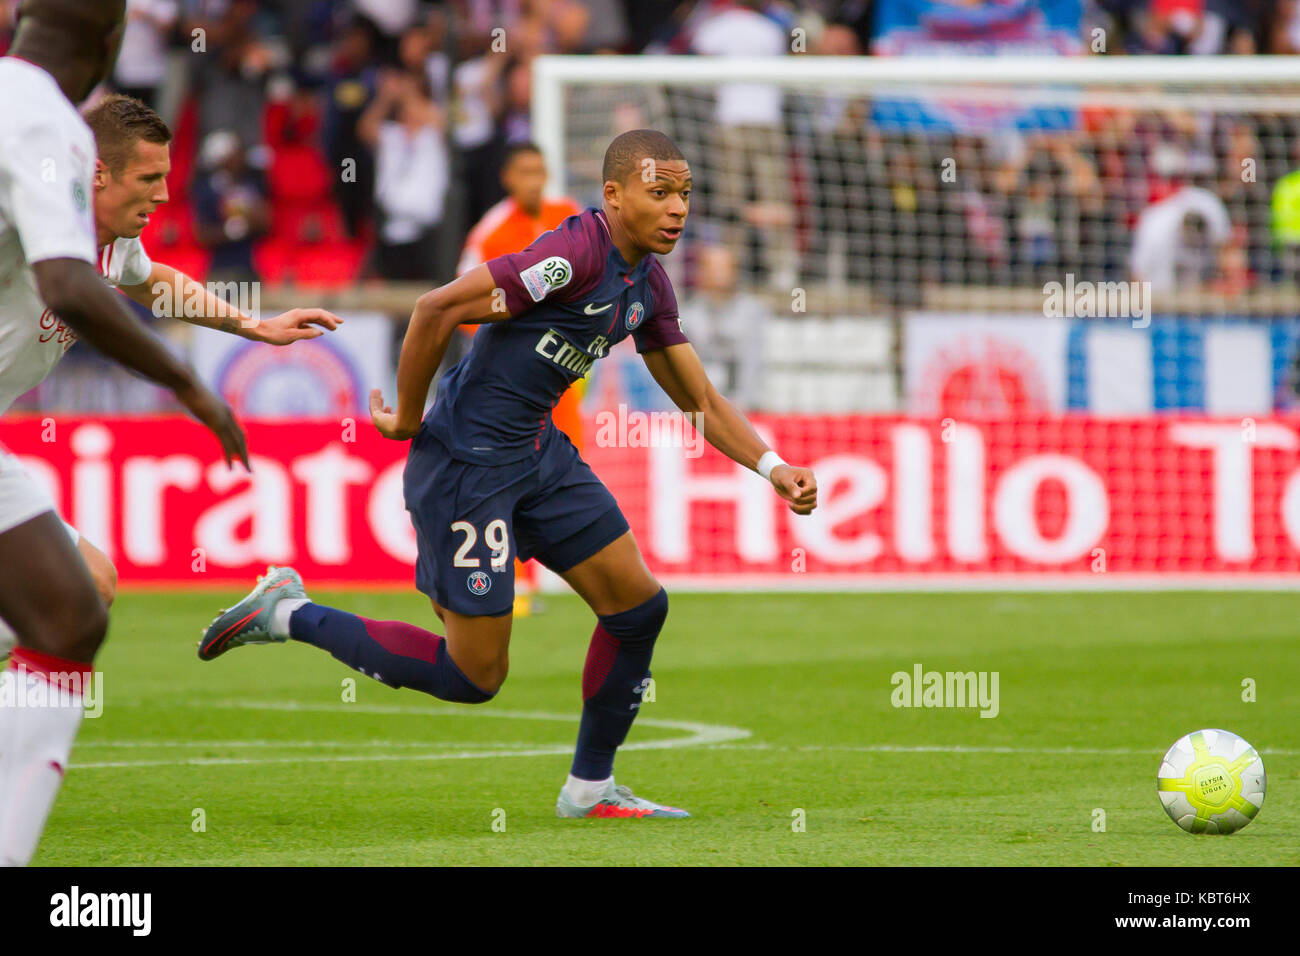 Kylian Mbappe in action during the French Ligue 1 soccer match between Paris Saint Germain (PSG) and Bordeaux at Parc des Princes. The match was won 6-2 by Paris Saint Germain. Stock Photo